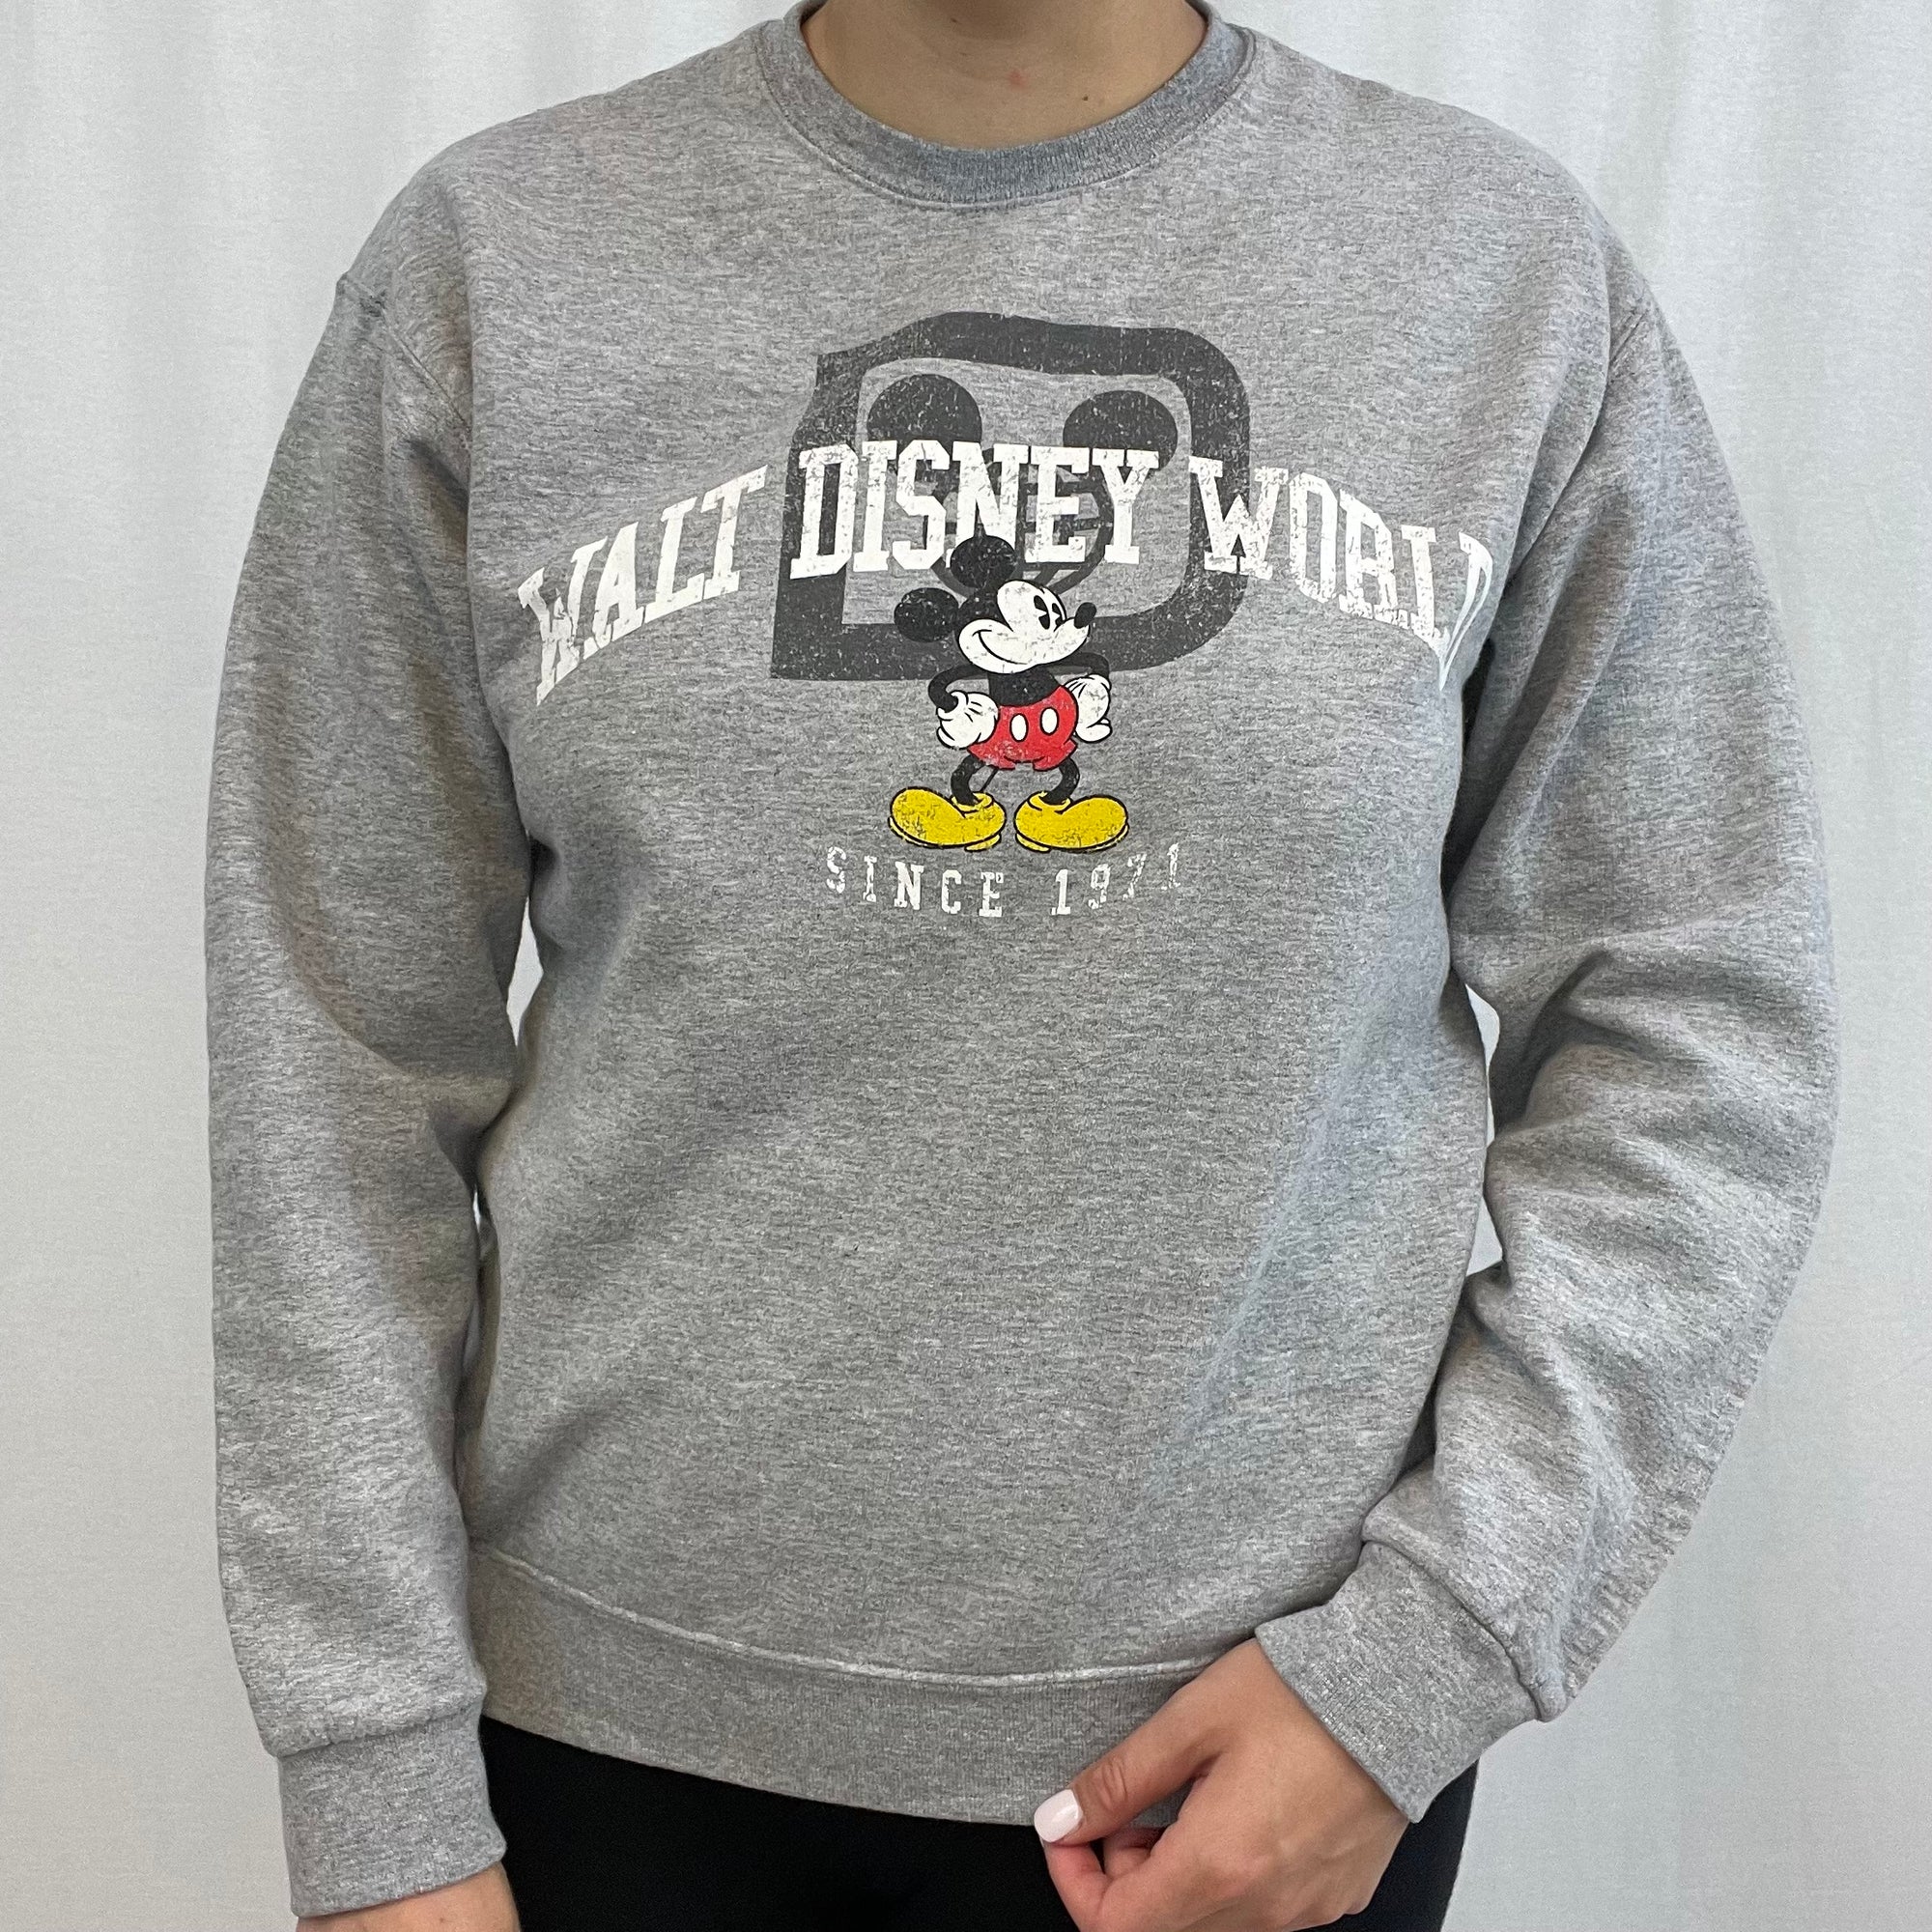 Walt Disney World Grey Crewneck size Medium